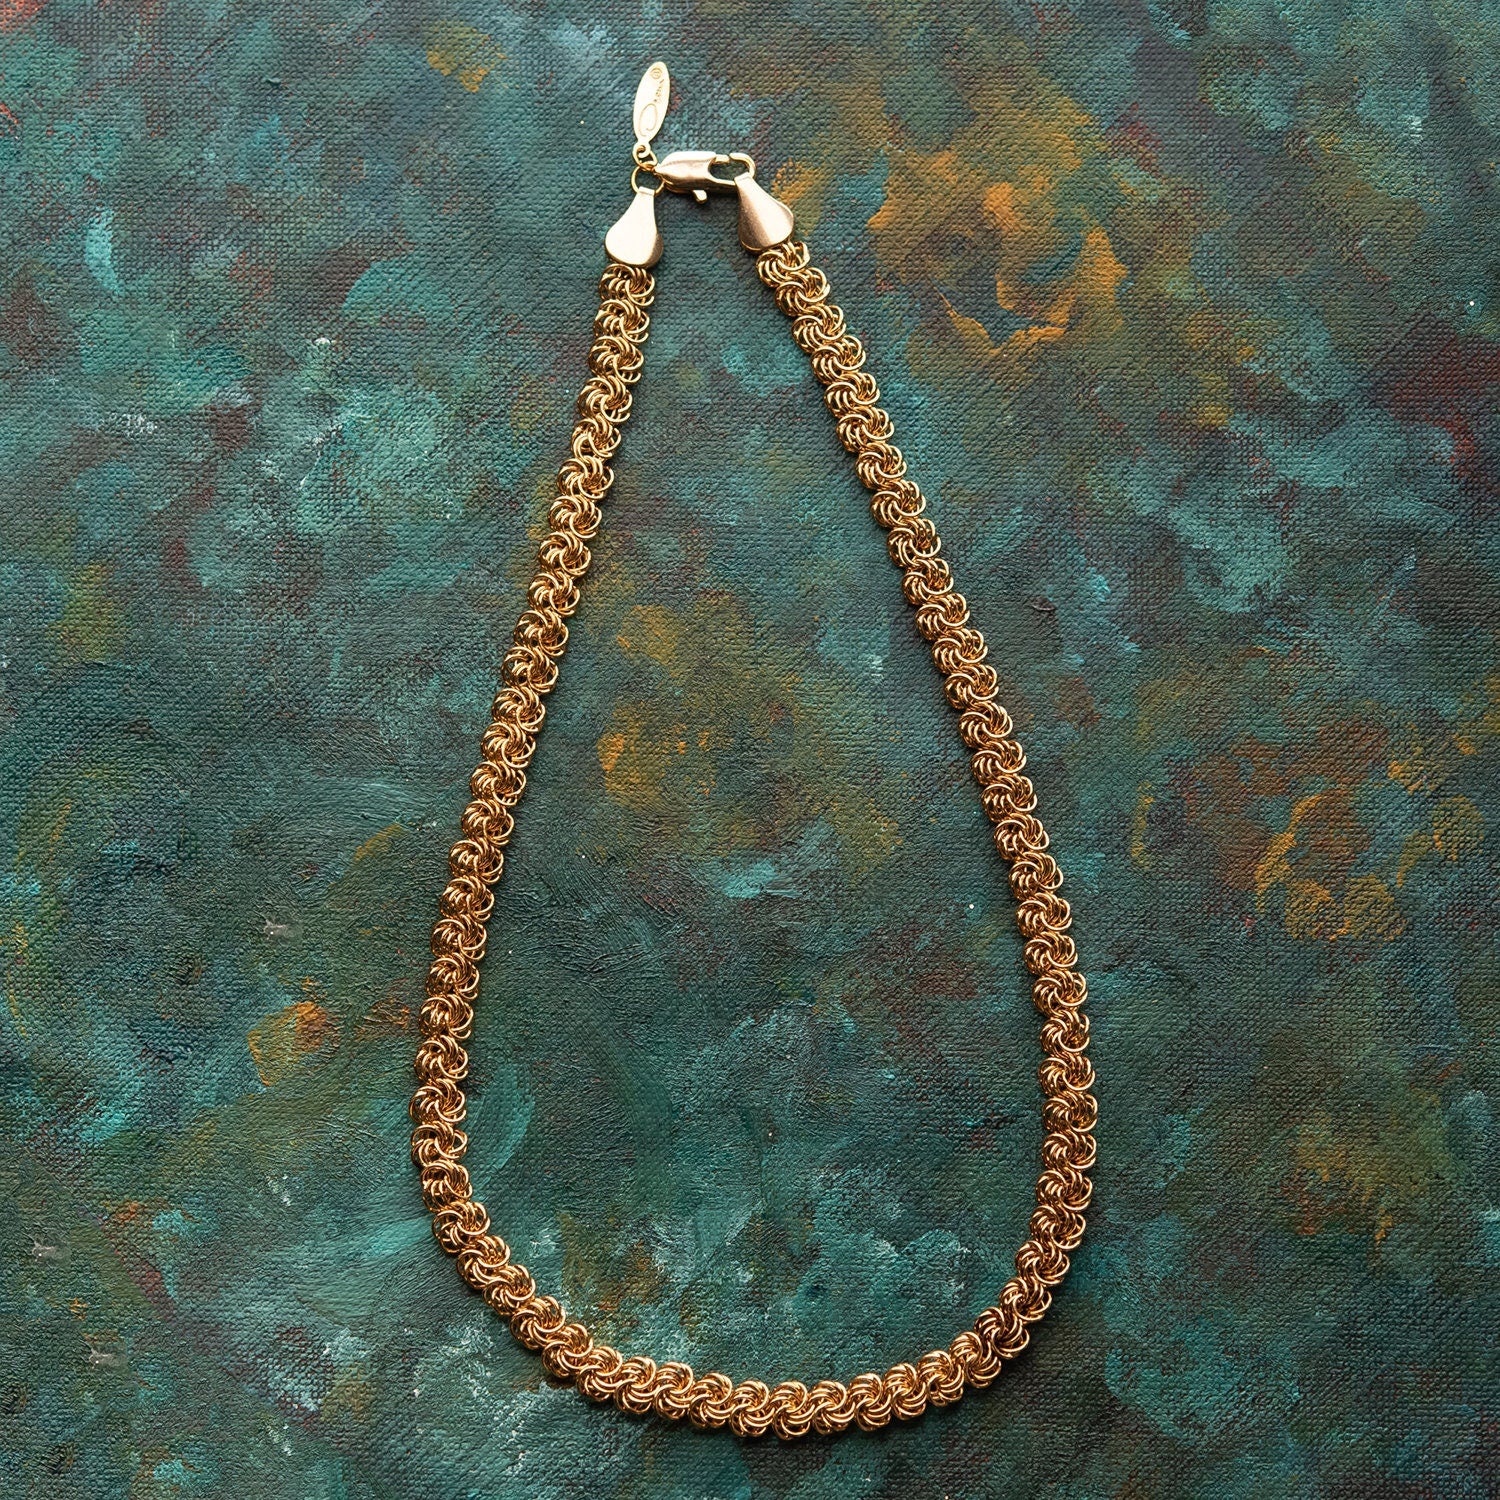 Vintage Oscar De La Renta 18 Inch Gold Tone Link Chain Necklace Antique Womans Jewlery #OSN-981-Y - Limited Stock - Never Worn